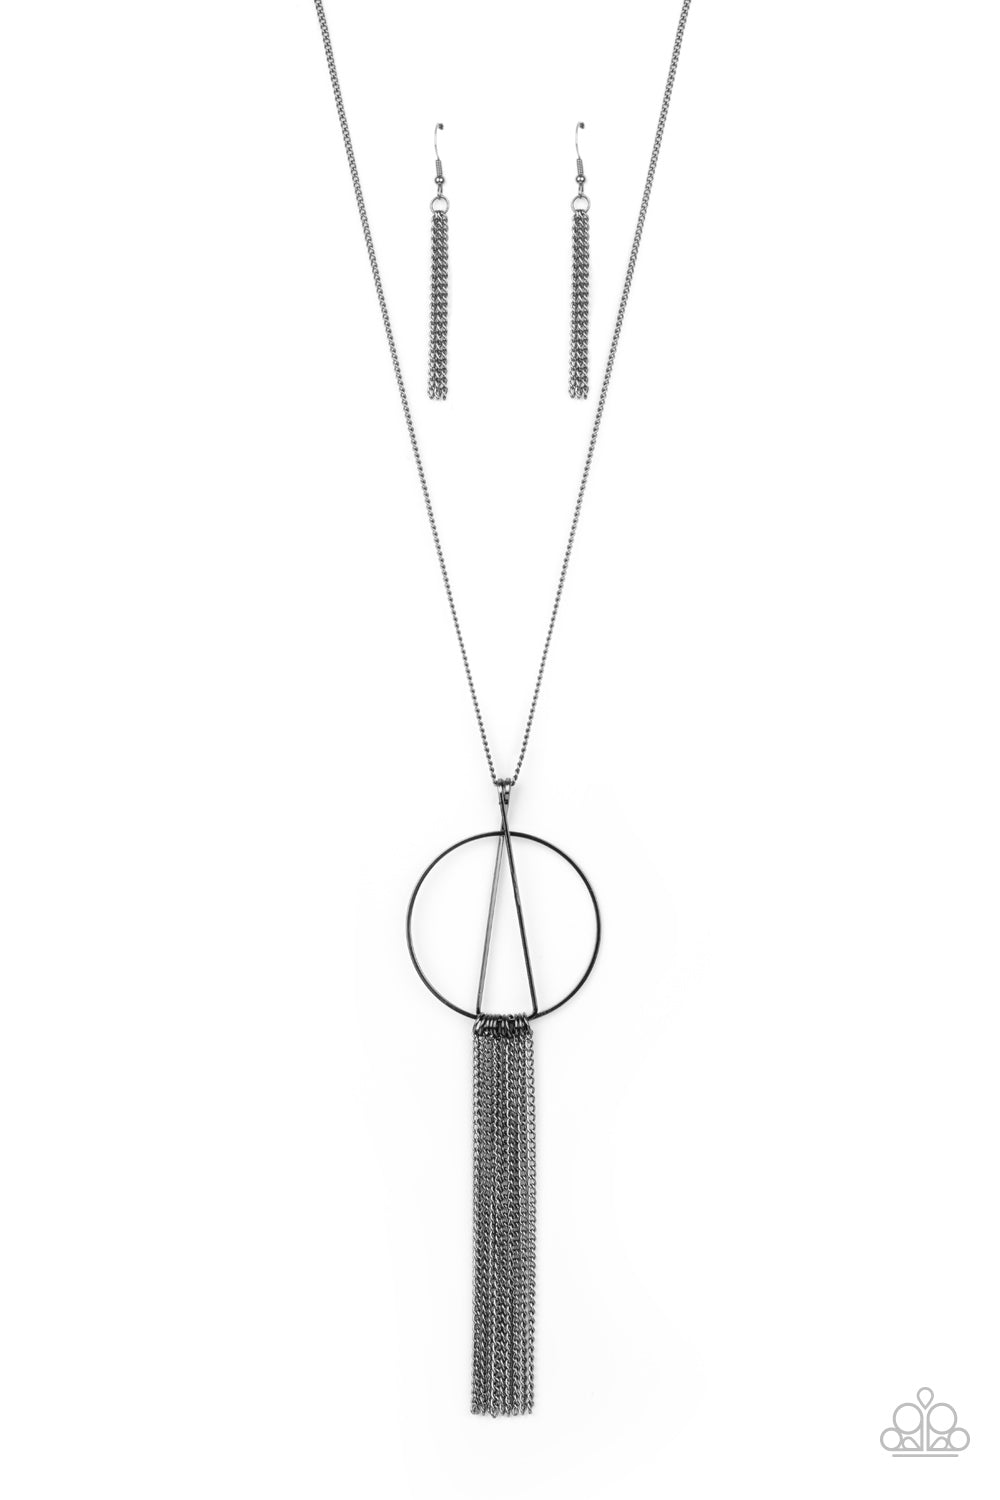 Apparatus Applique - Black Necklace freeshipping - JewLz4u Gemstone Gallery